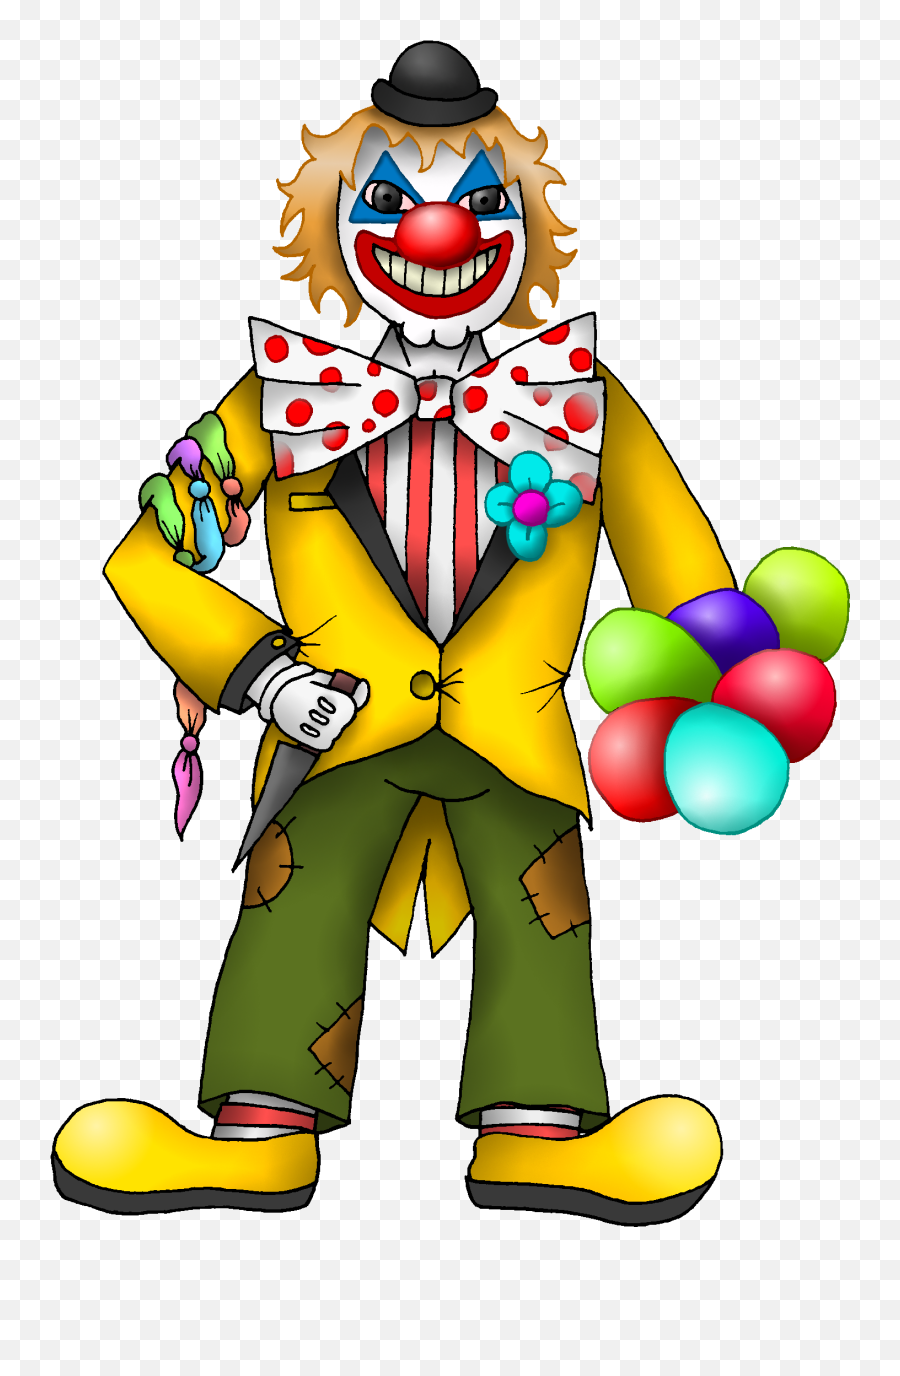 Download Bibo The Clown - Clown Full Size Png Image Pngkit Transparent Cartoon Scary Clown,Clown Png